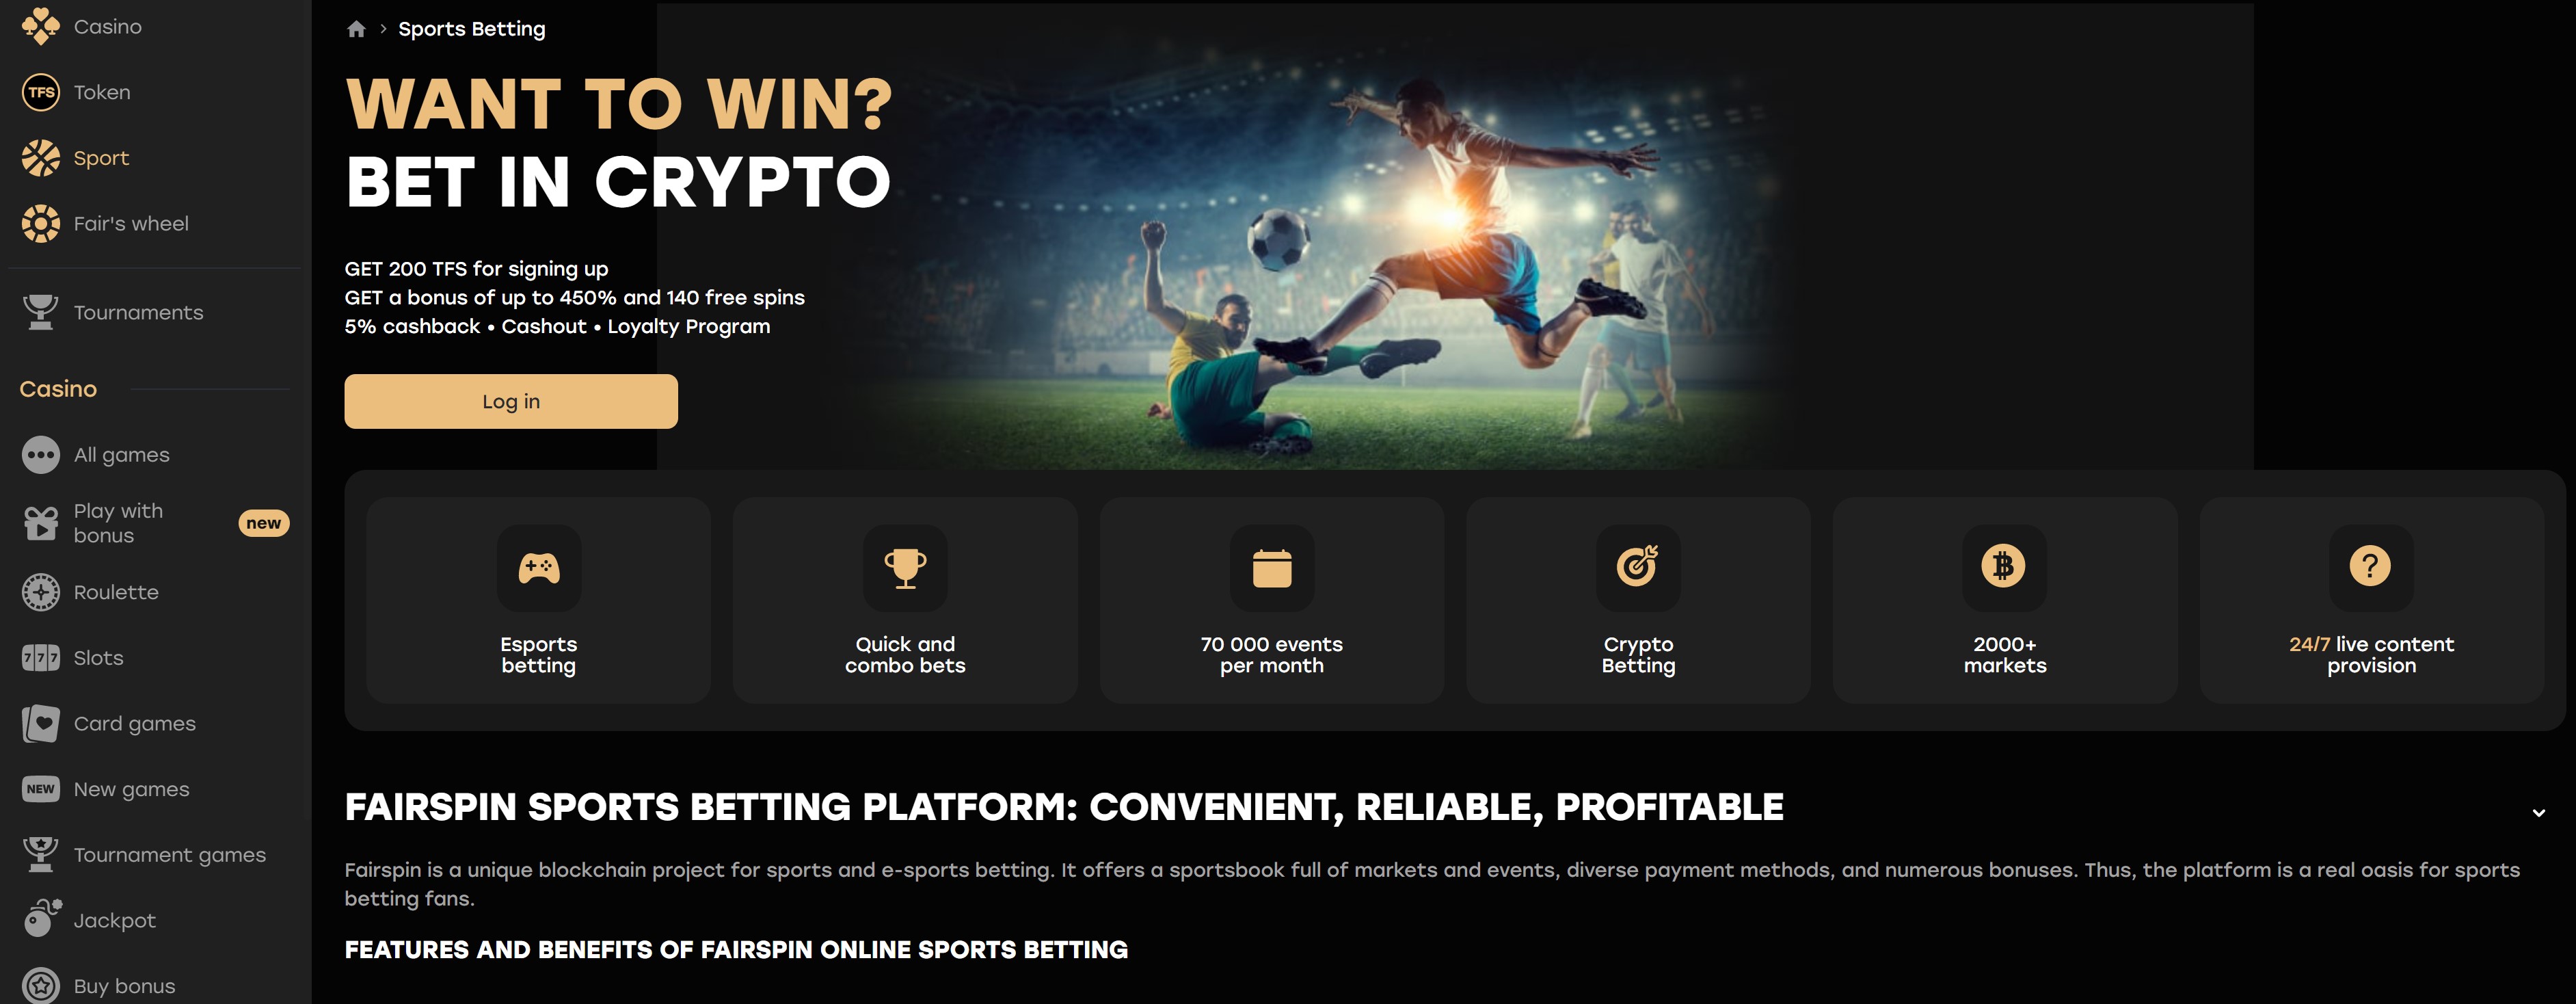 fairspin crypto casino homepage